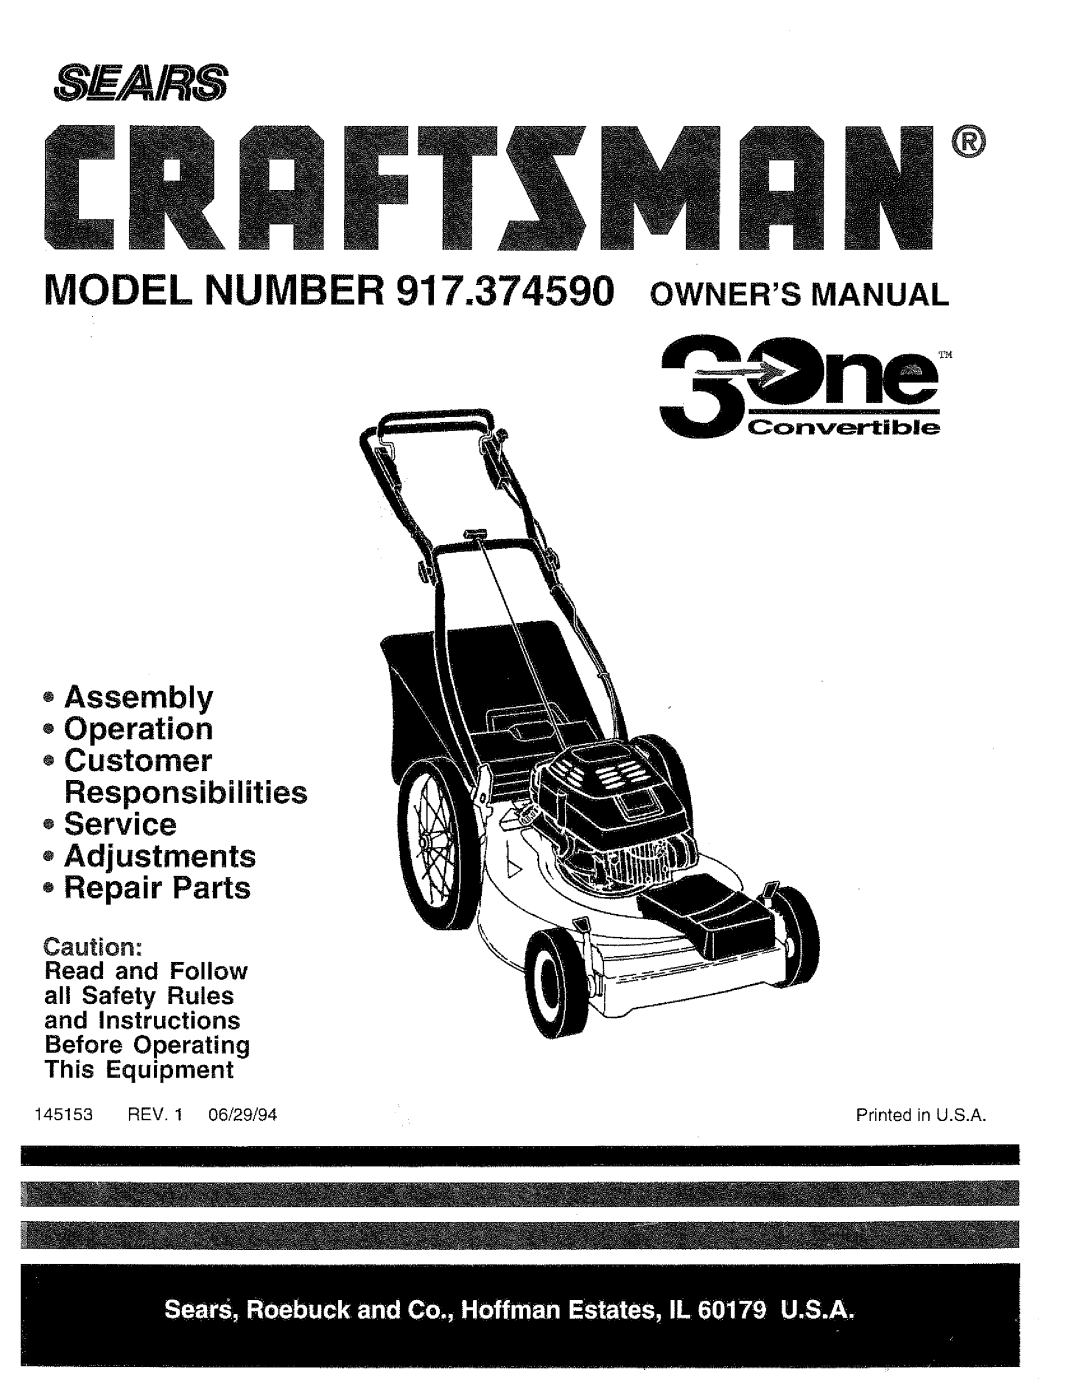 Craftsman 917.37459 owner manual Assembly Operation Customer Responsibilities, Service Adjustments Repair Parts, Sears 